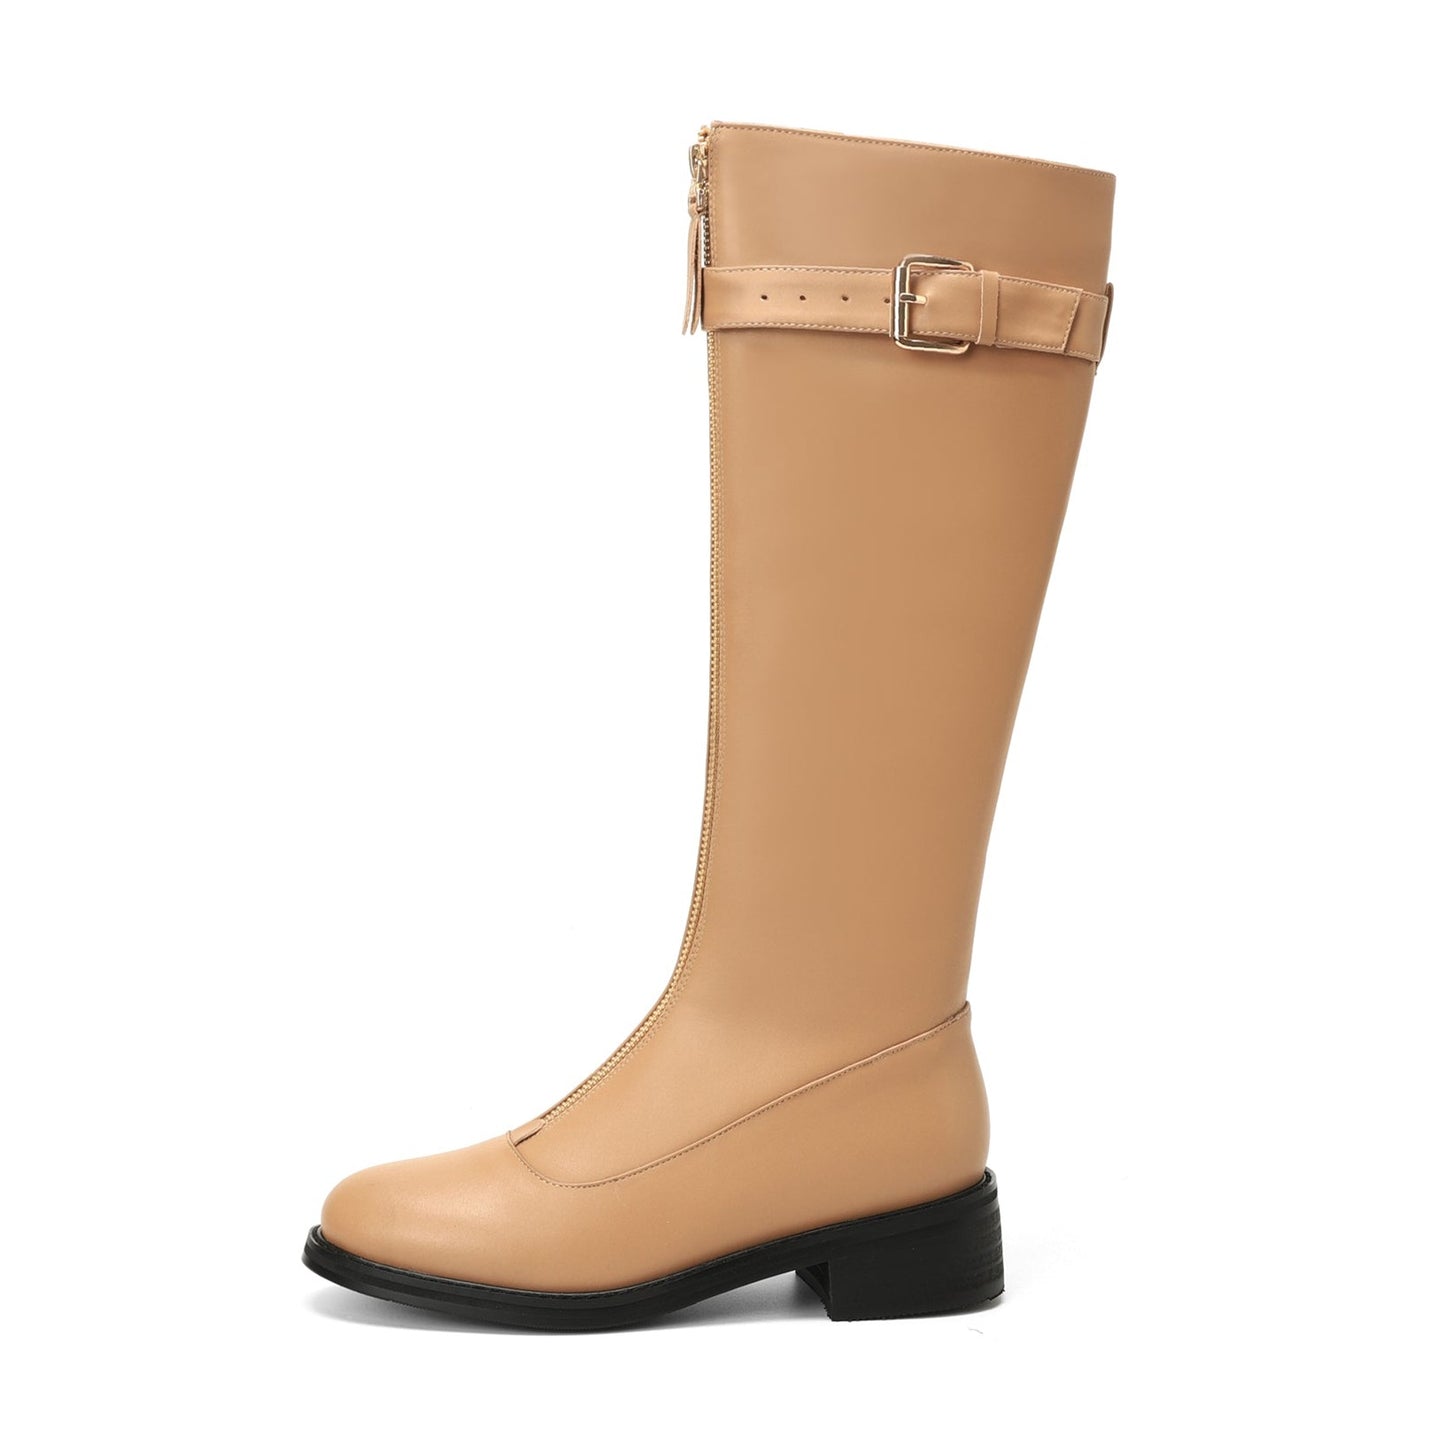 TinaCus Women's Genuine Leather Handmade Round Toe Front Zipper Comfort Low Heel Knee High Boots with Buckle